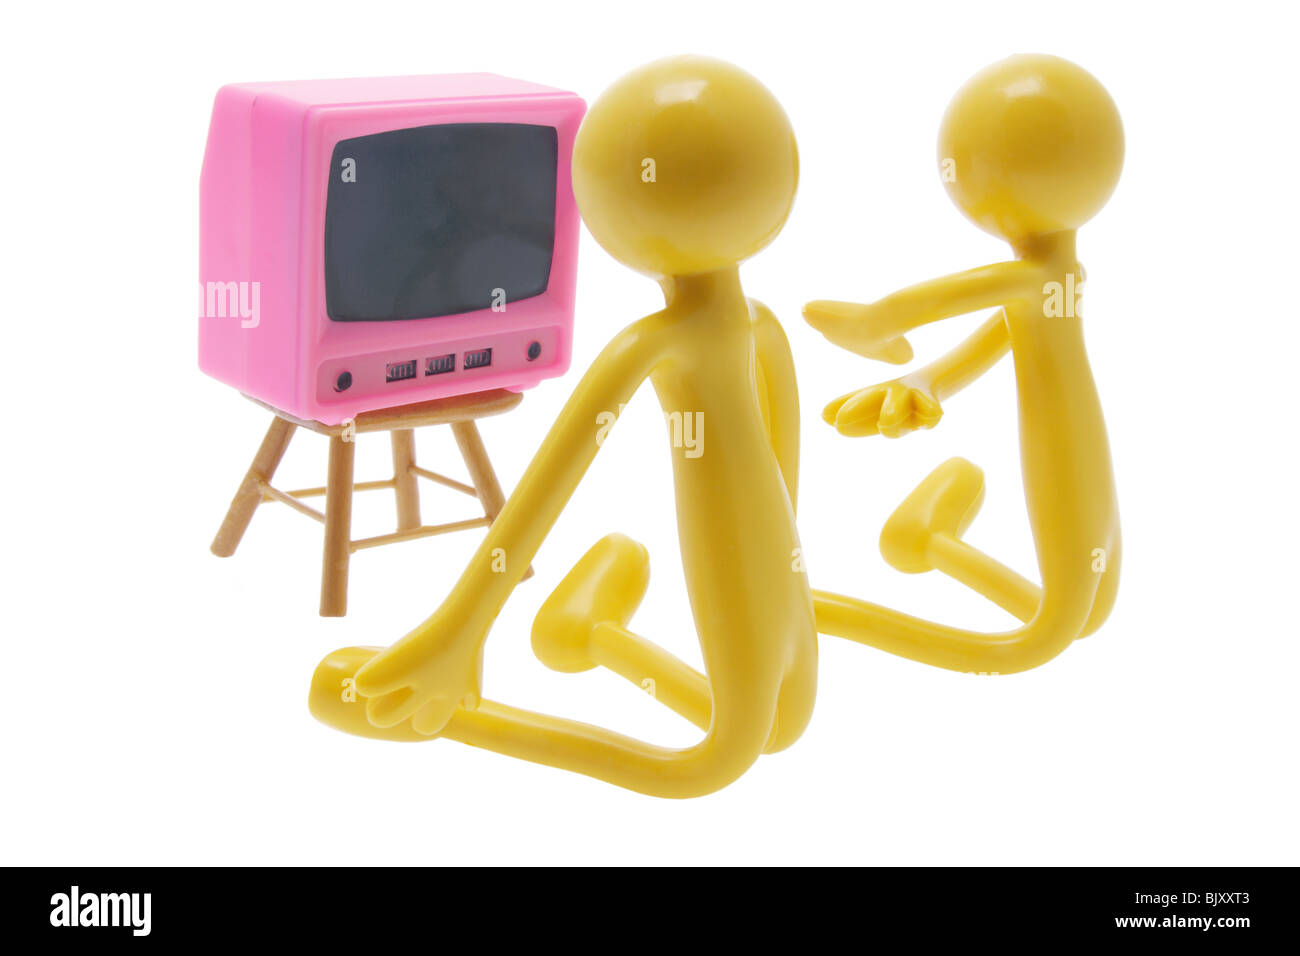 Miniature Figures Watching TV Stock Photo